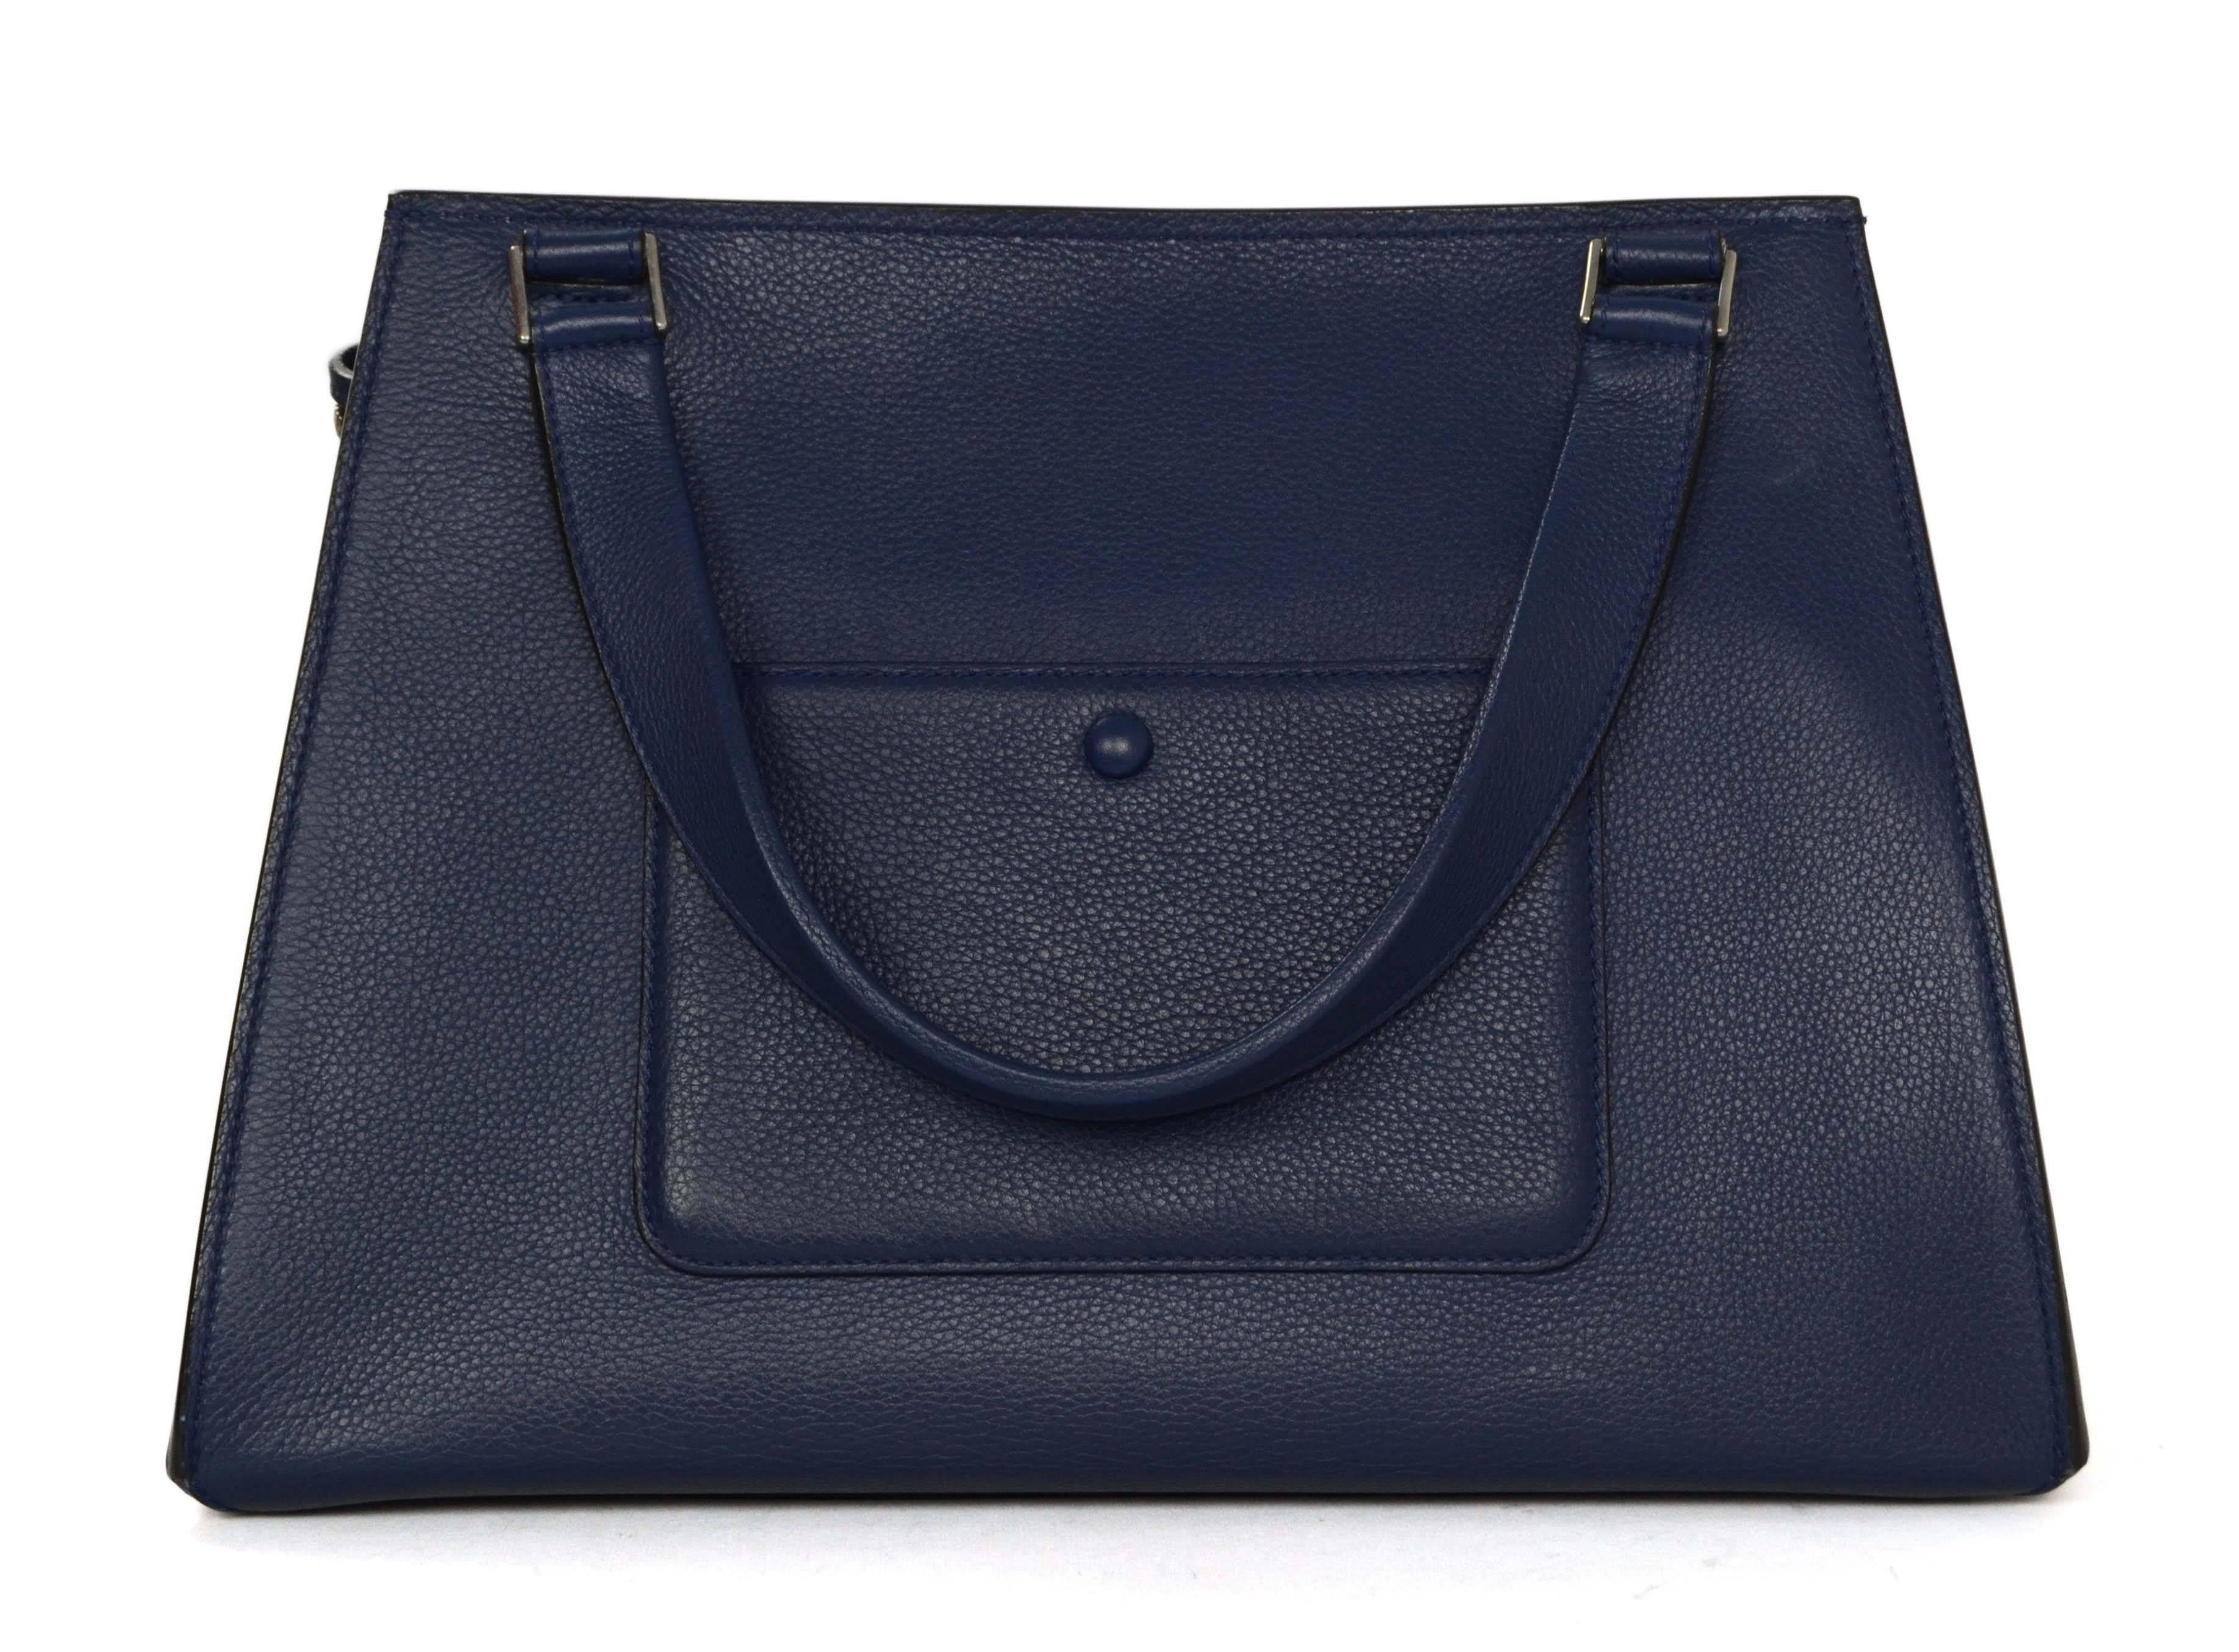 Black Celine Blue Leather Medium Edge Tote Bag SHW rt. $2, 600